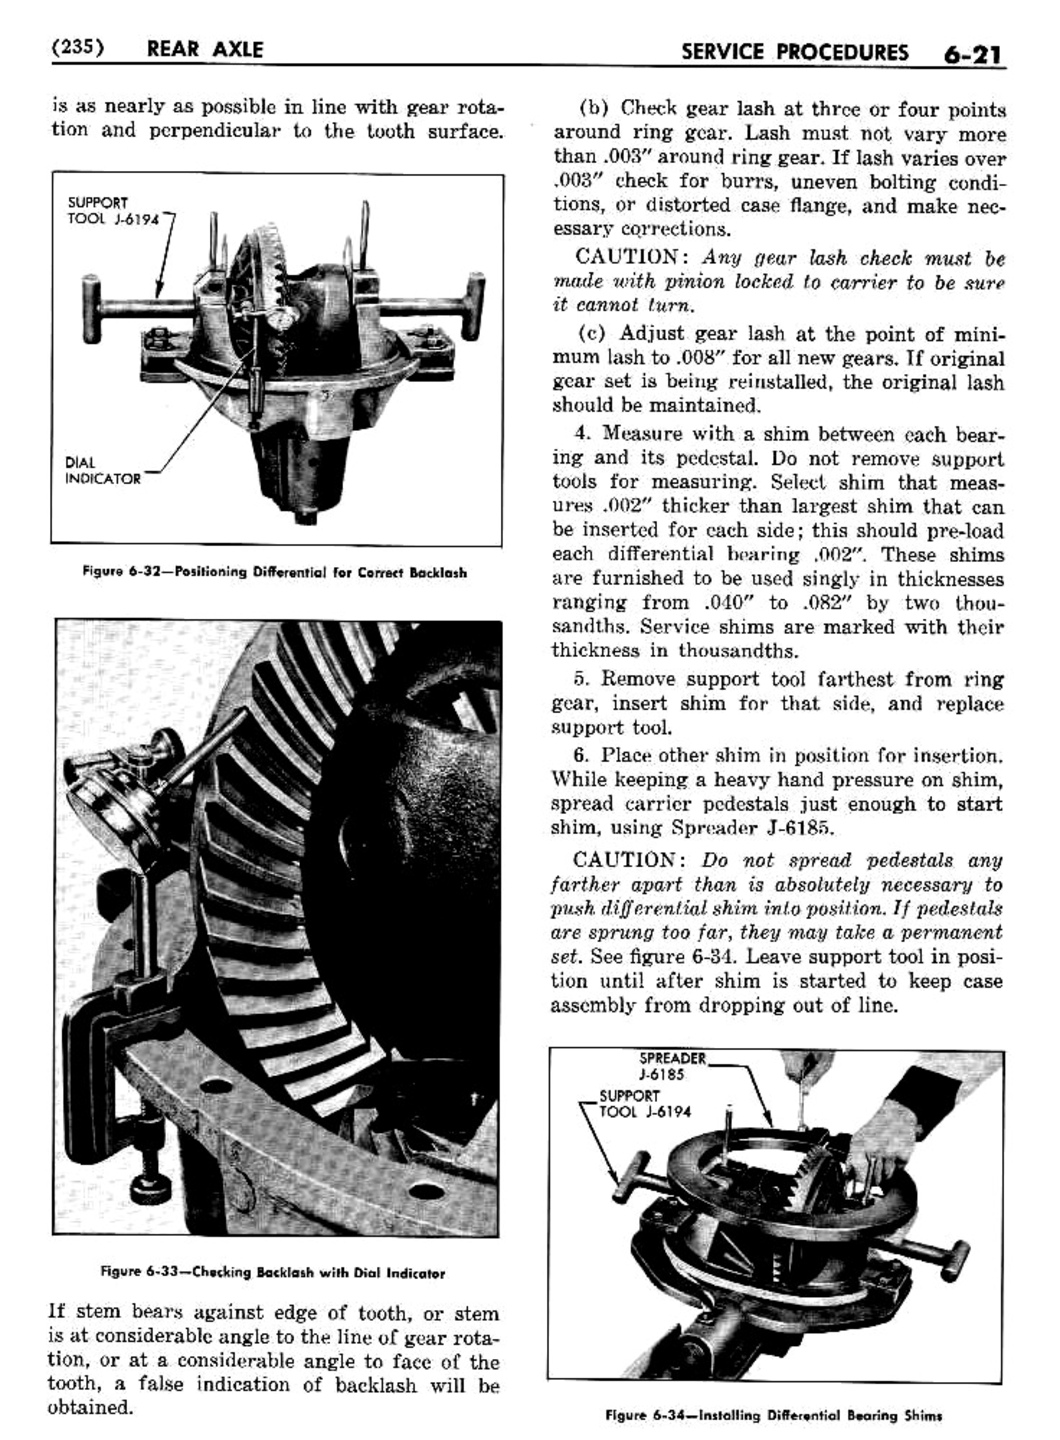 n_07 1956 Buick Shop Manual - Rear Axle-021-021.jpg